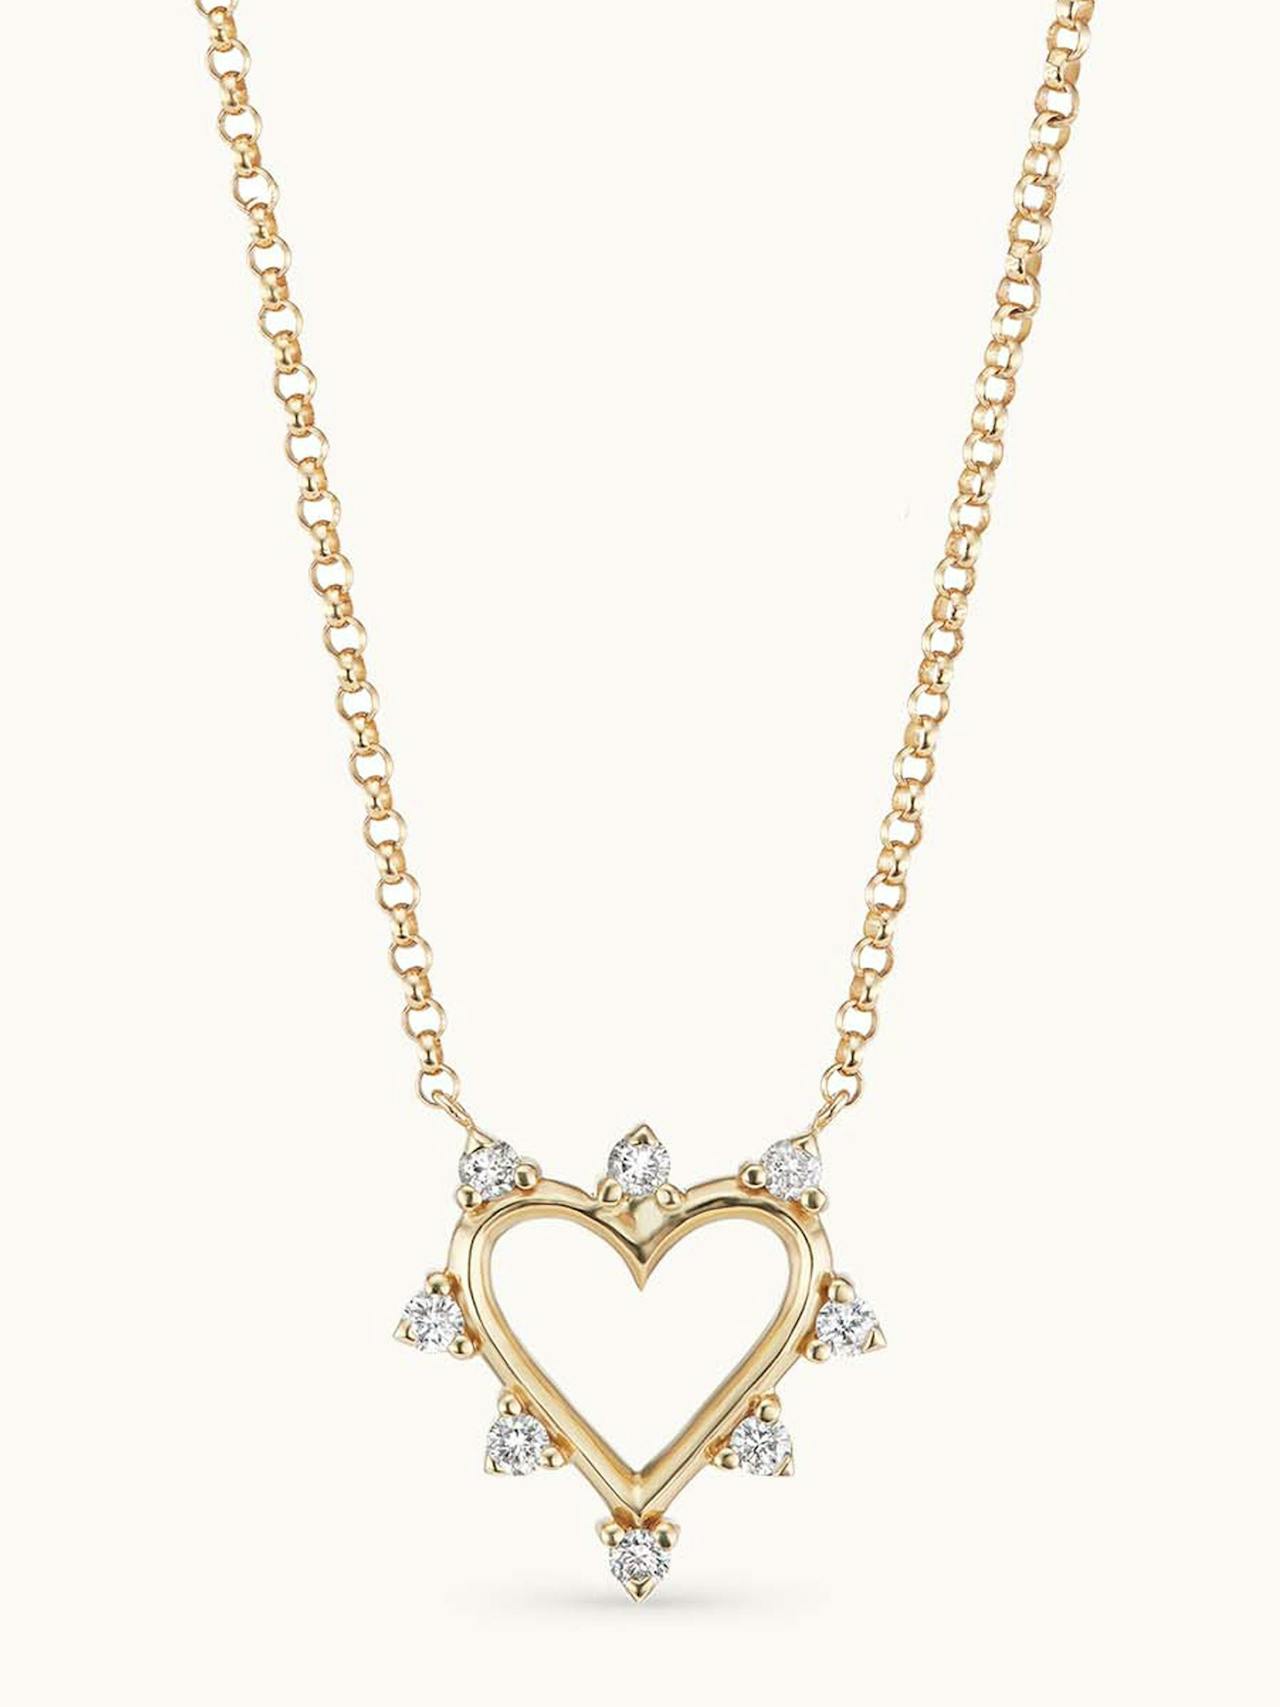 Mini open heart necklace